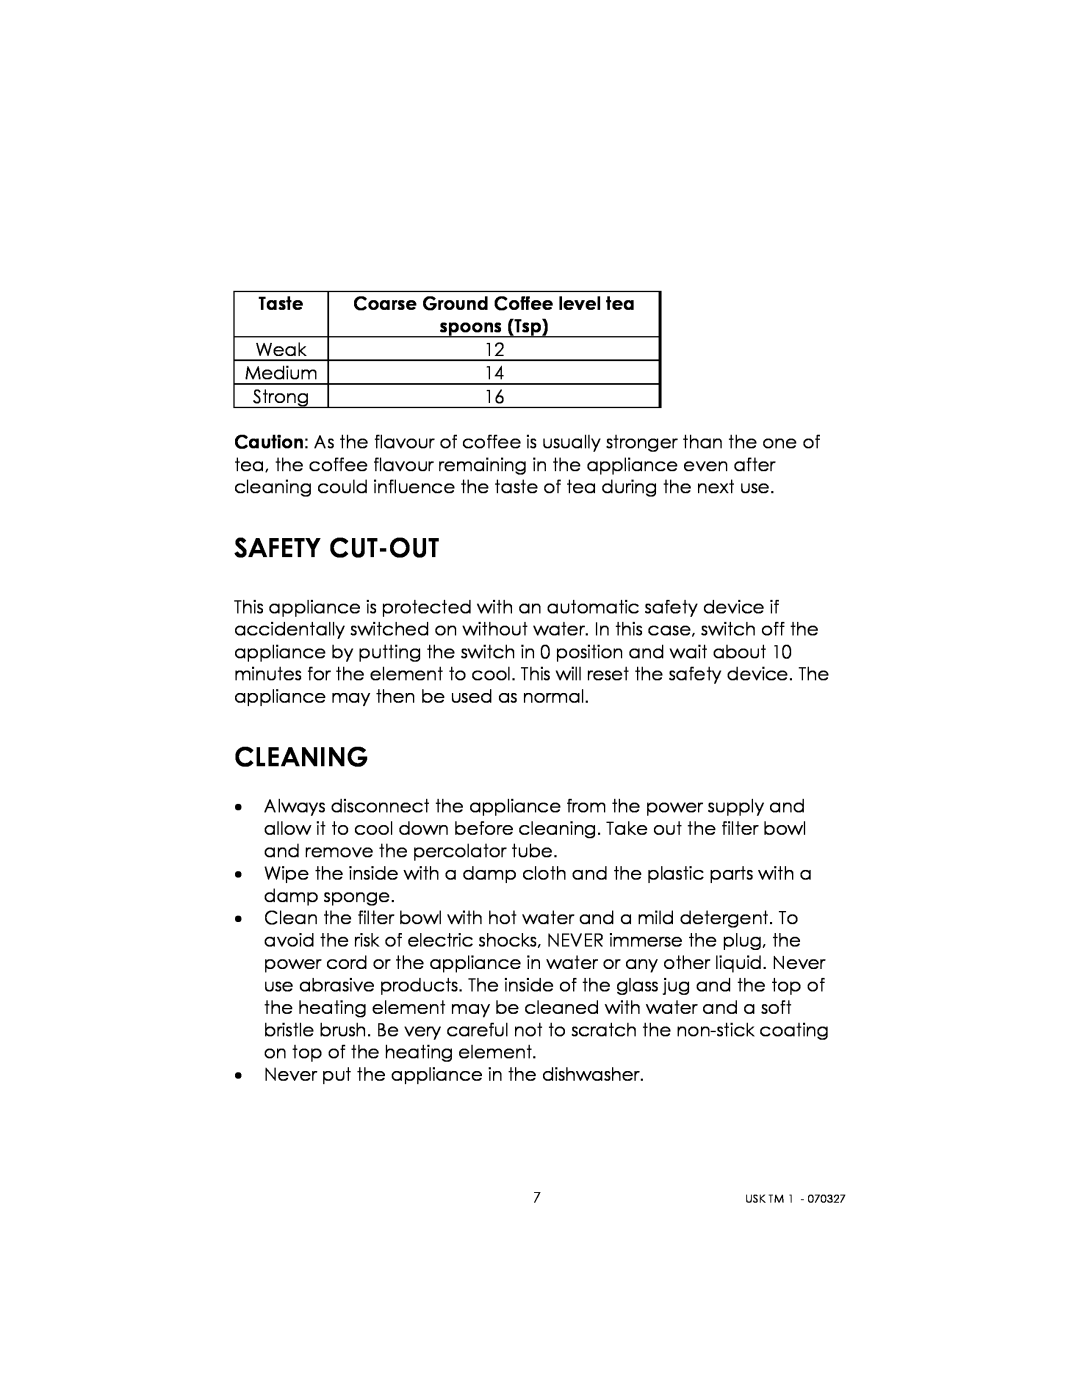 Kalorik usktm1 manual Safety Cut-Out, Cleaning 